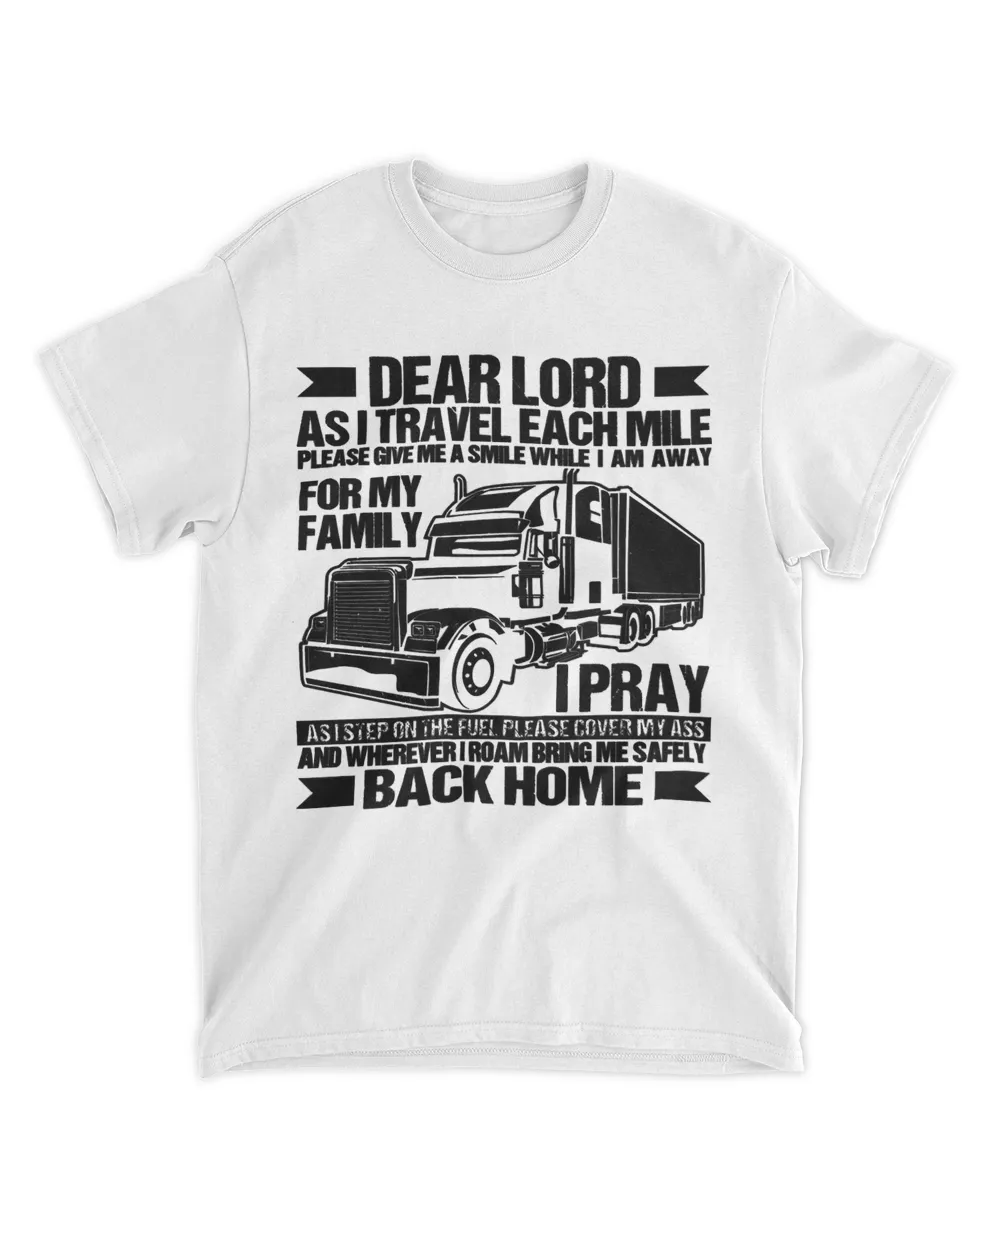 Trucker Dear Lord As I Travel Each Mile 77 trucks